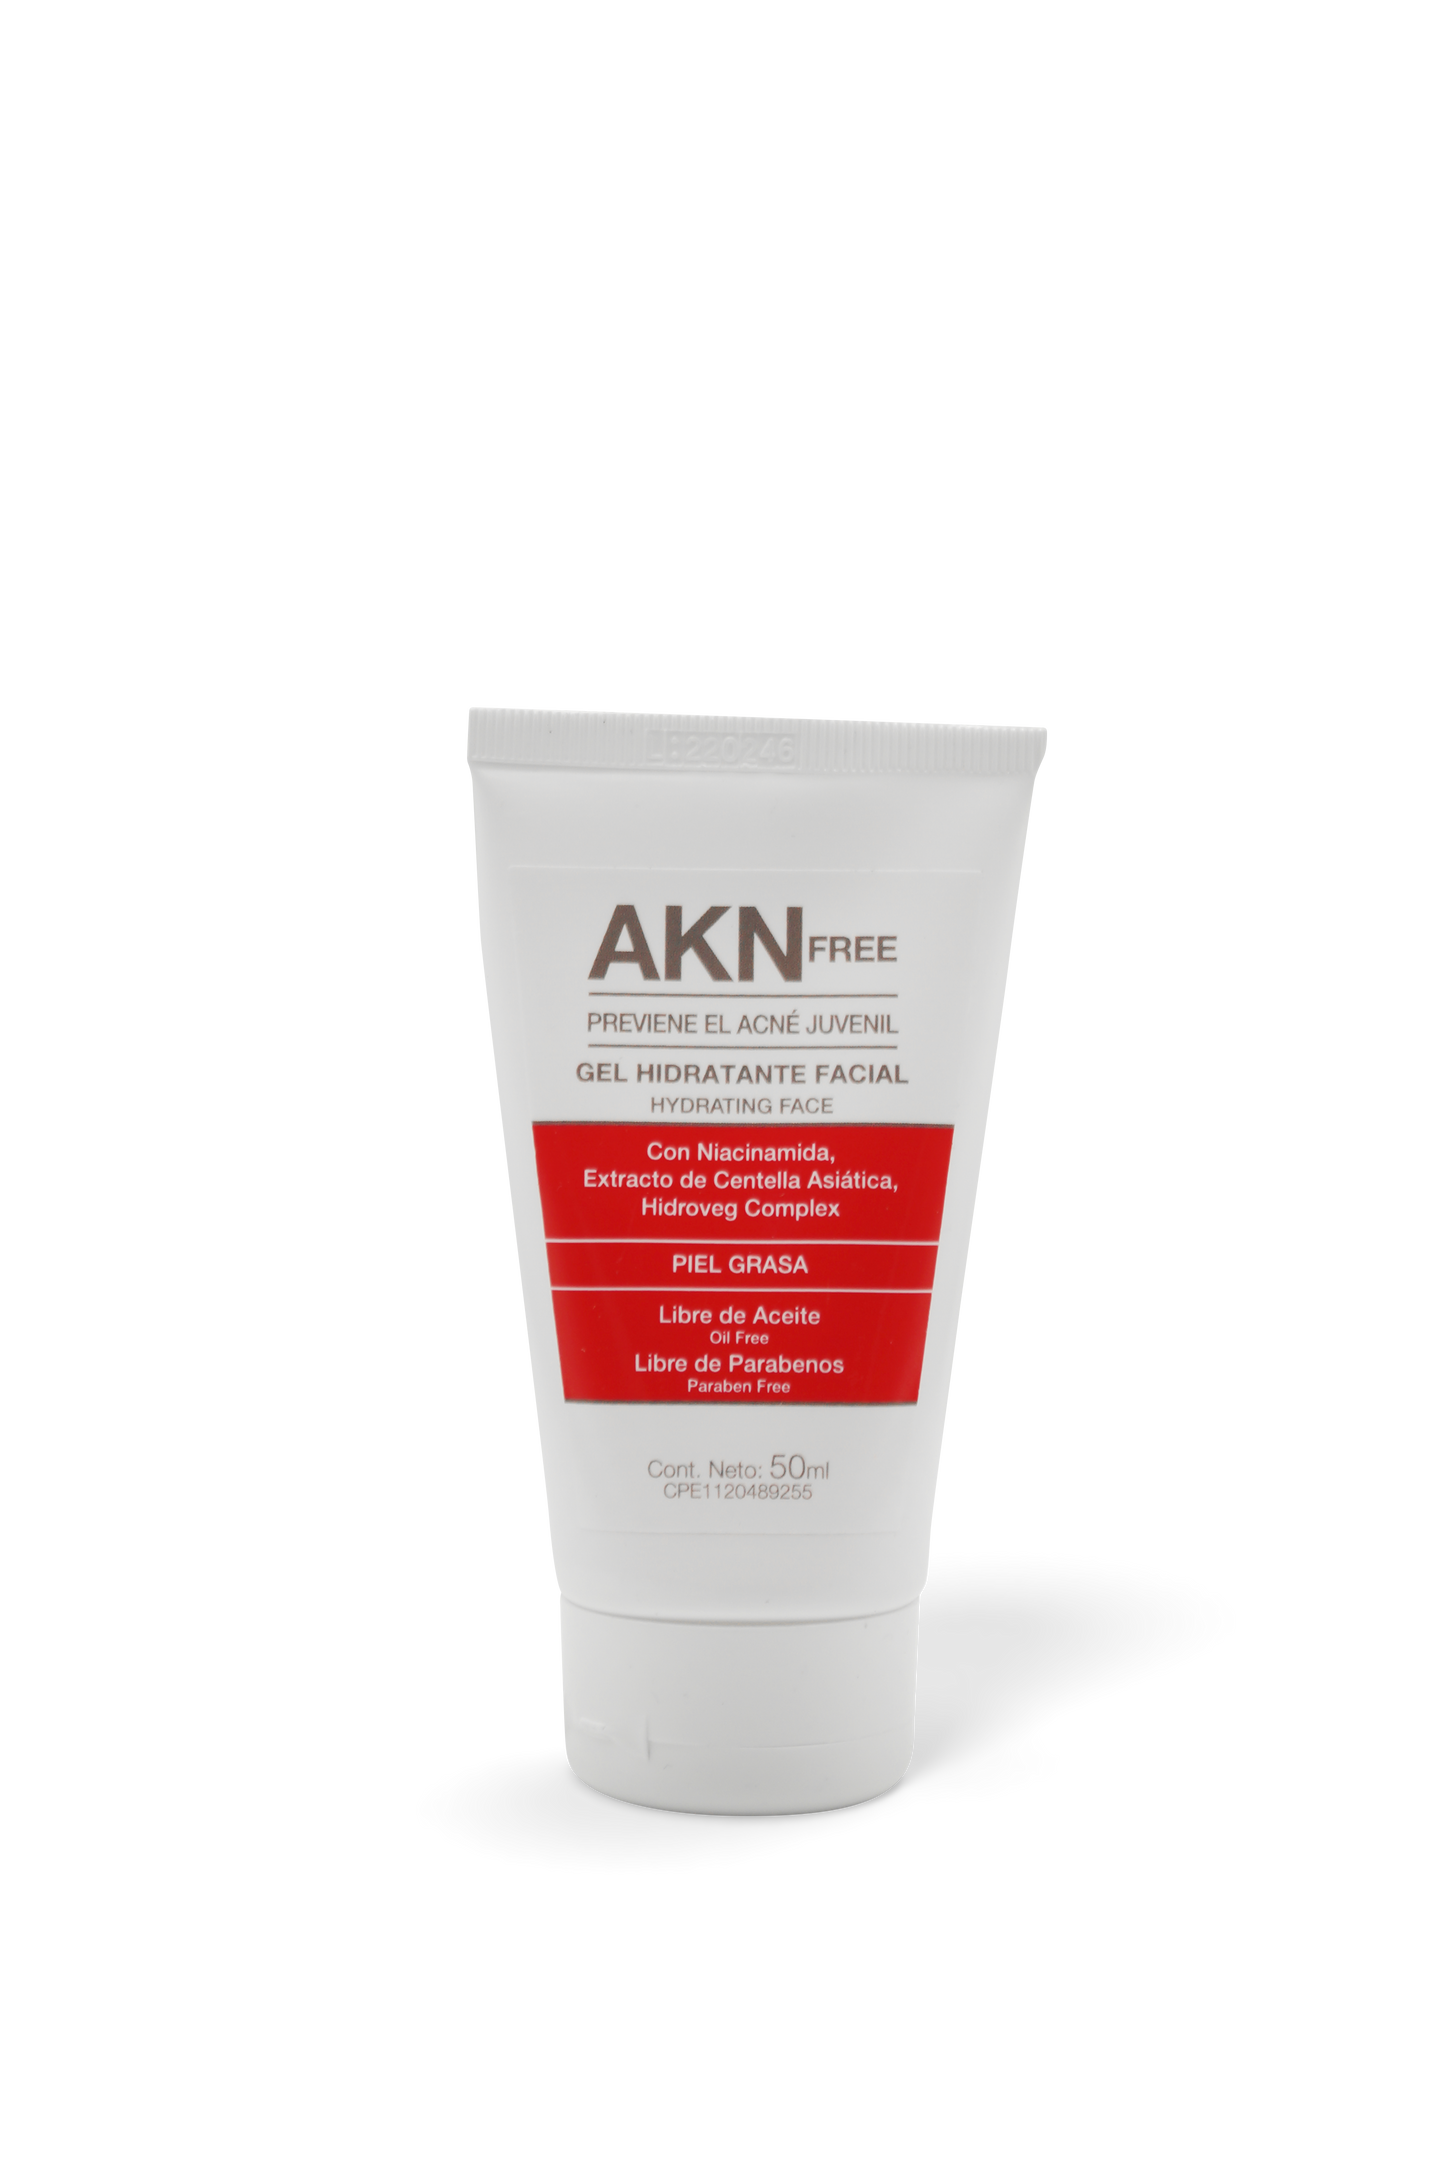 AKN free gel hidratante facial 50mL